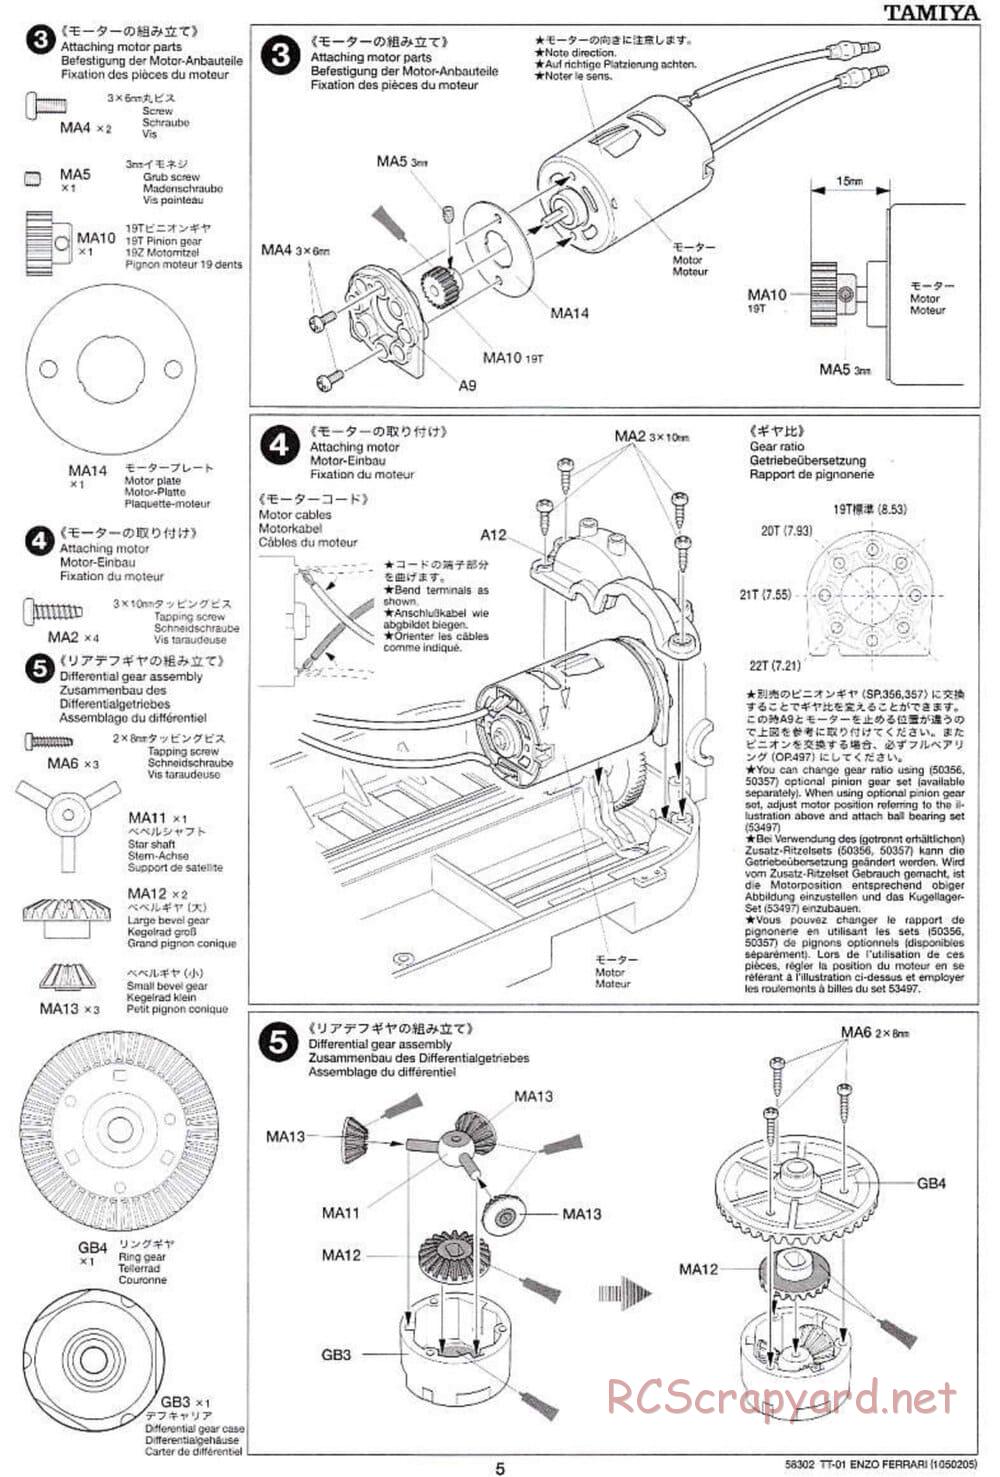 Tamiya - Enzo Ferrari - TT-01 Chassis - Manual - Page 5